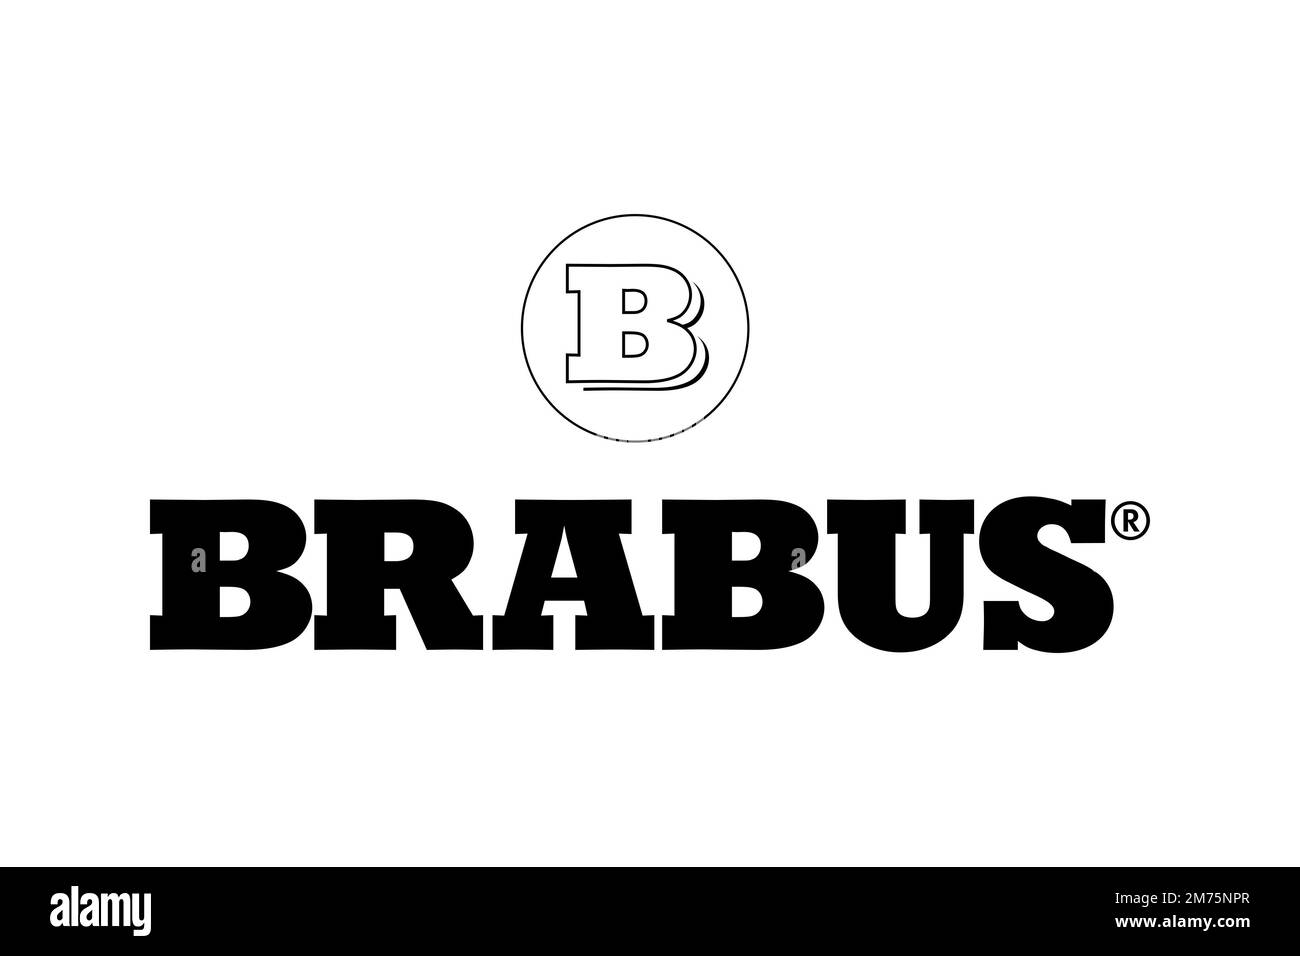 Brabus, Logo, White background Stock Photo - Alamy